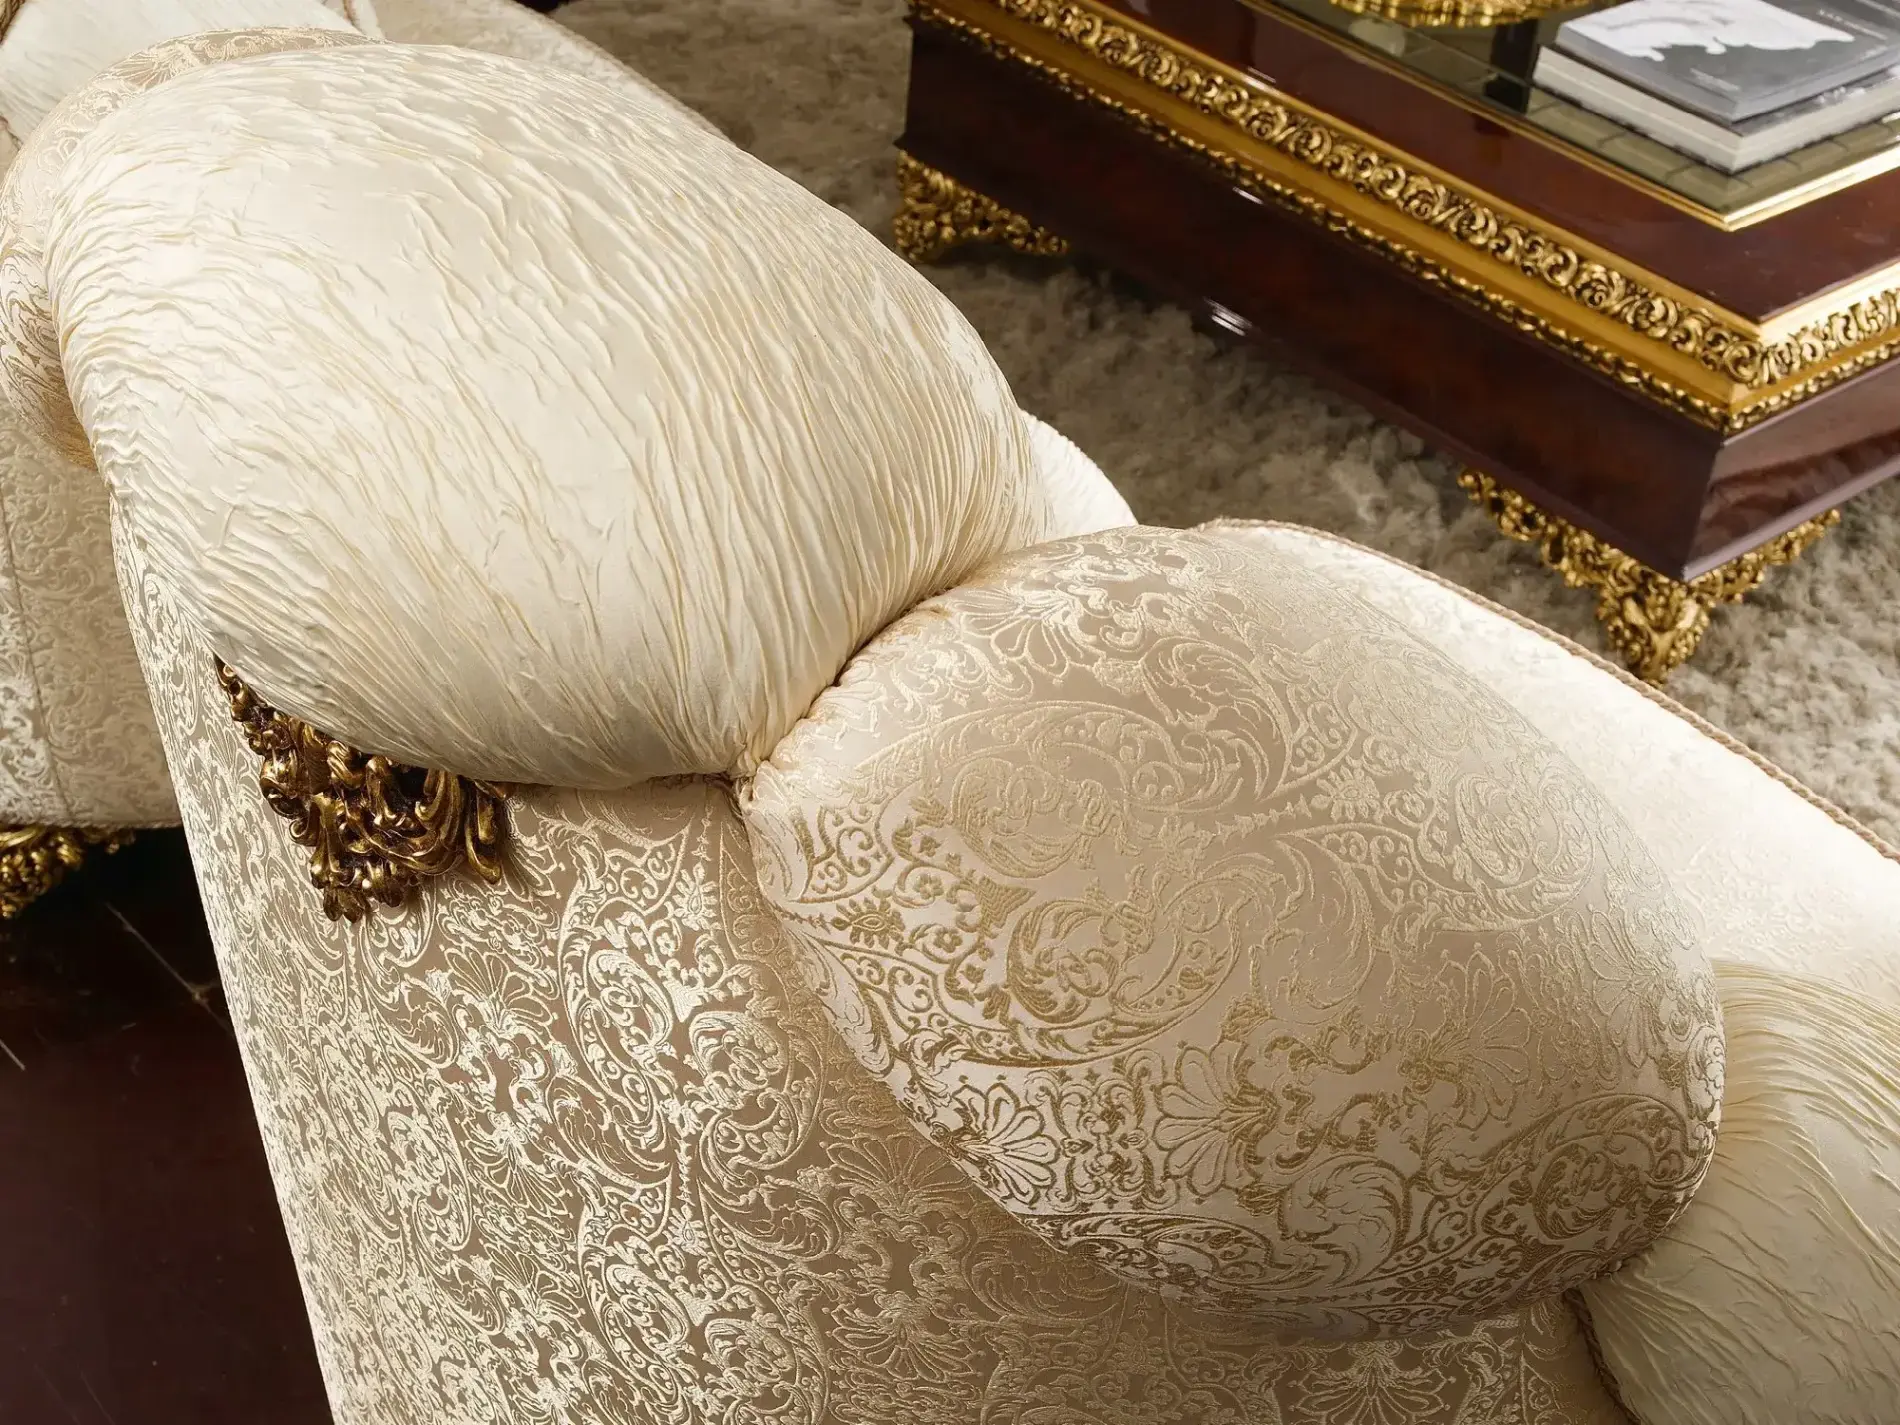 Artisan Italian Fabric Armchair